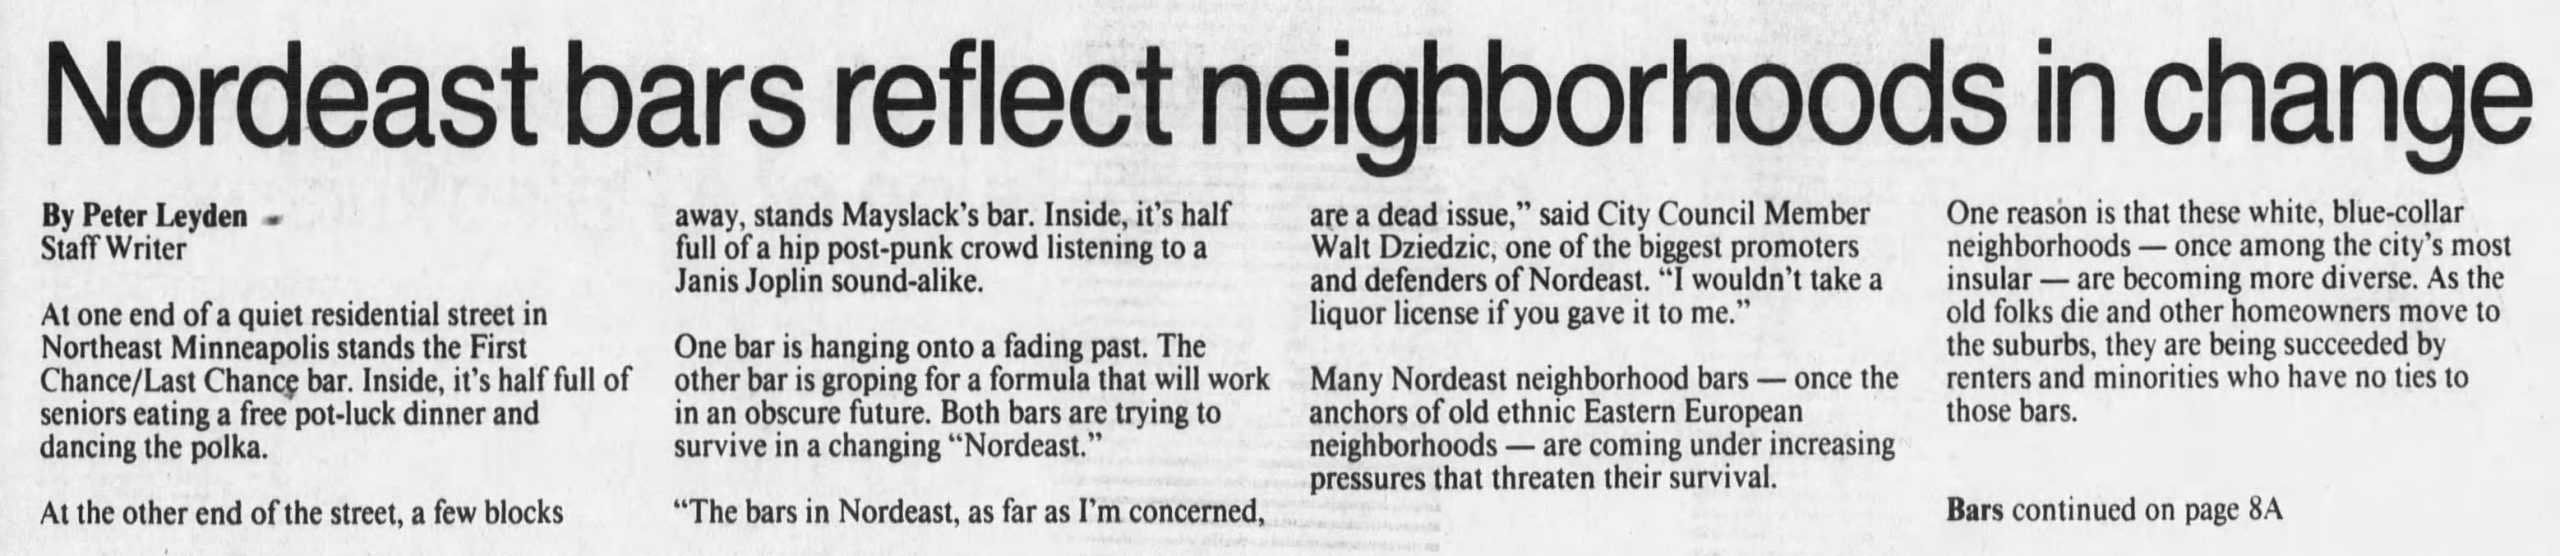 Star Tribune - Monday, March 25, 1991 - Page 1